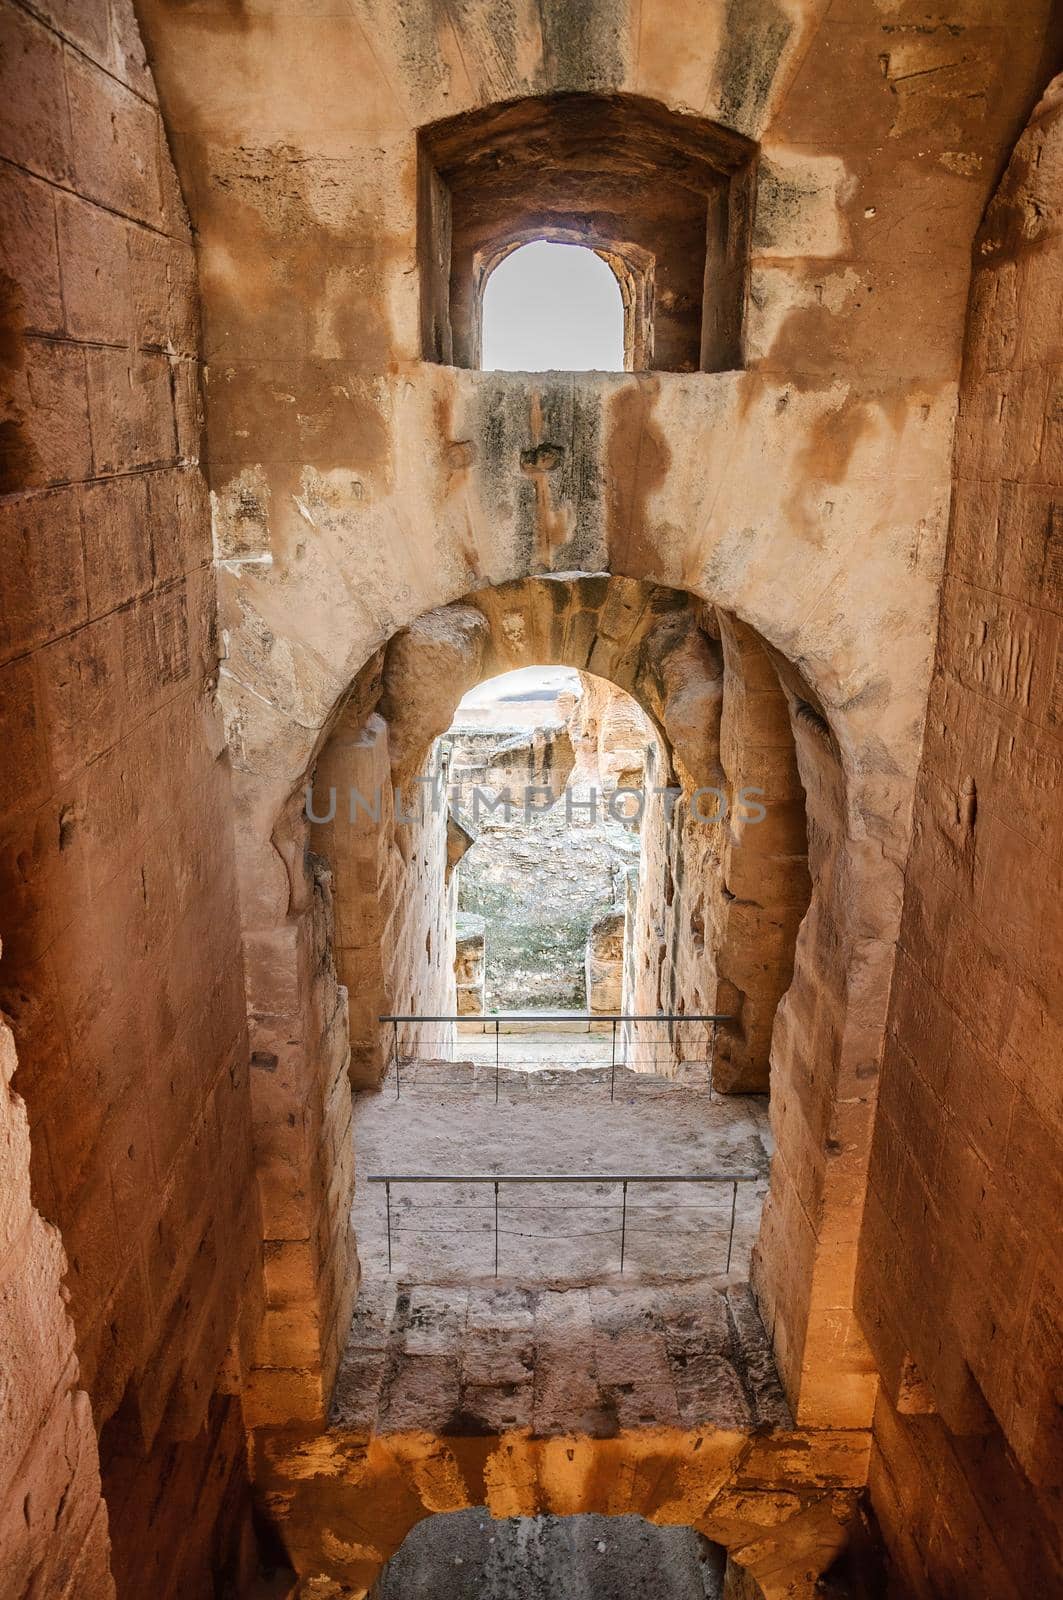 Arch in ruins of the largest coliseum in North Africa. El Jem,Tunisia, UNESCO